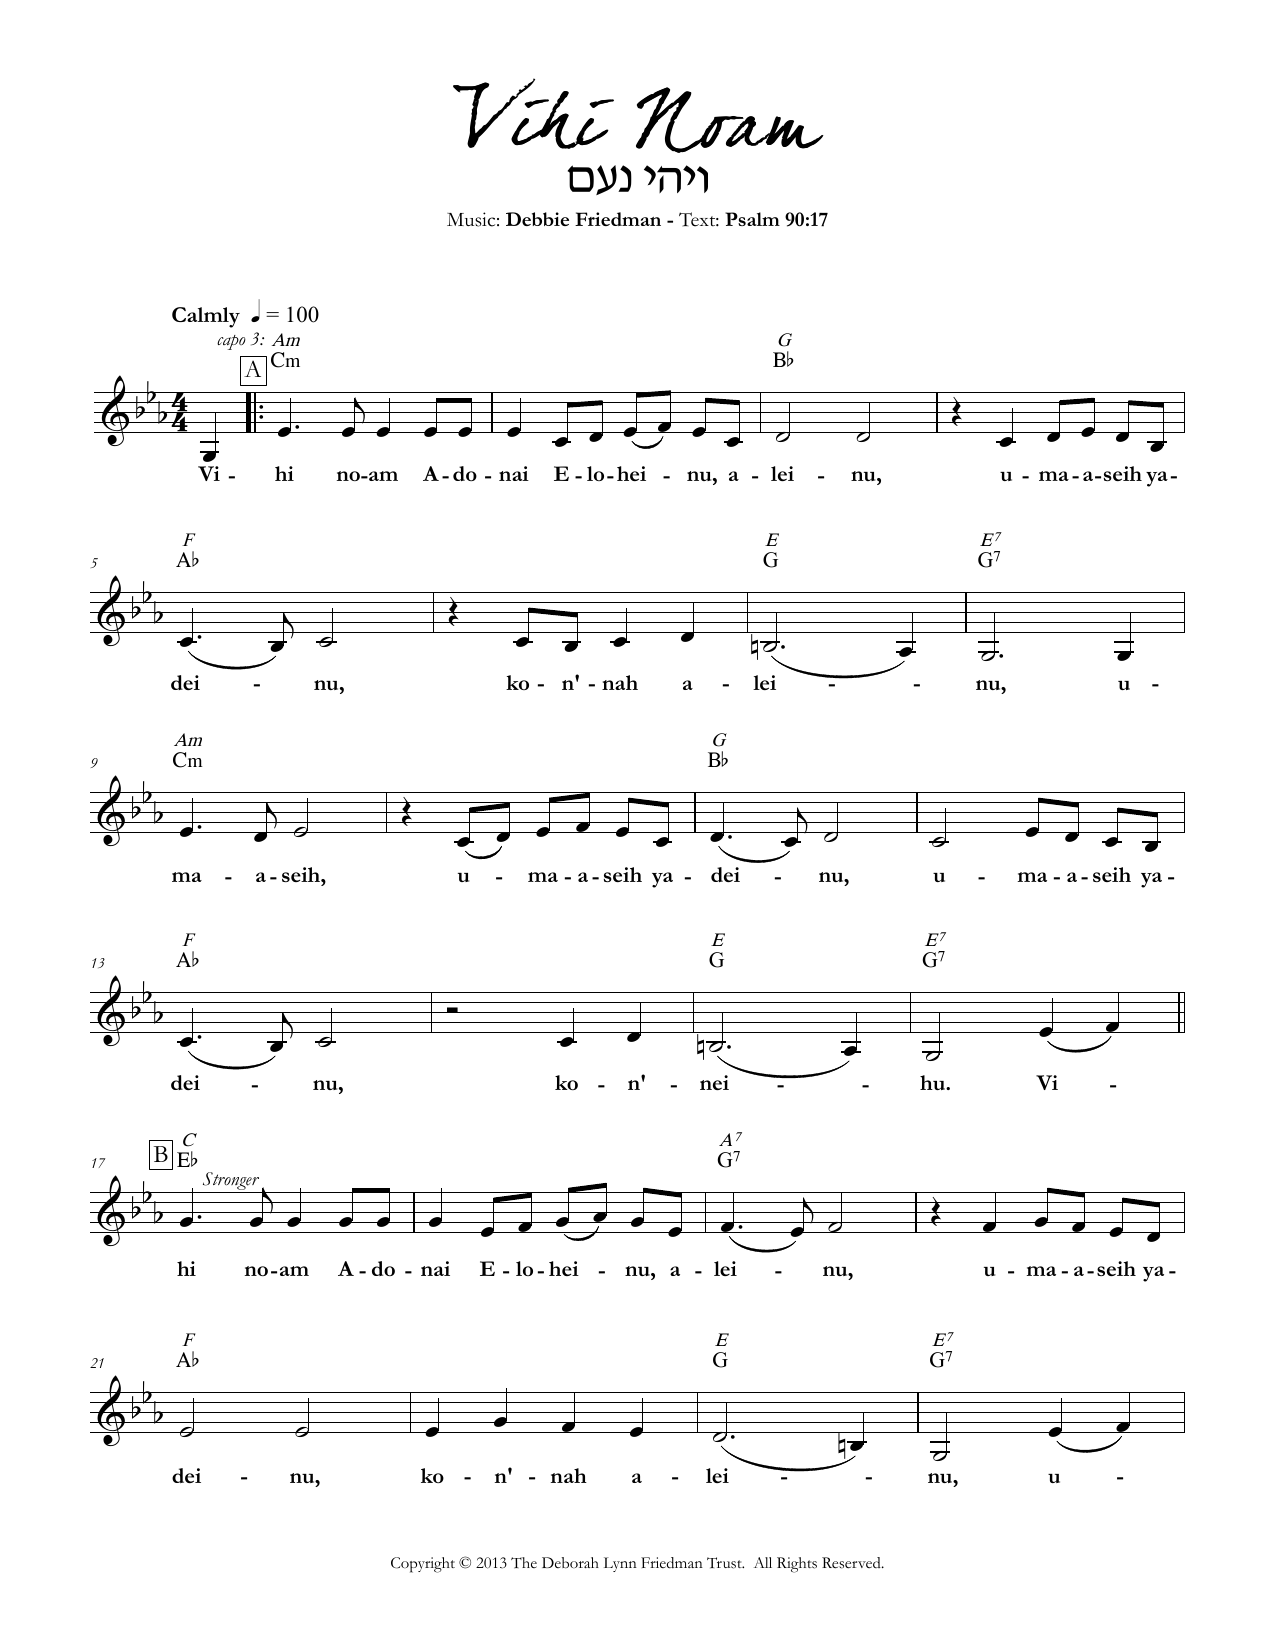 Download Debbie Friedman Vihi Noam Sheet Music and learn how to play Lead Sheet / Fake Book PDF digital score in minutes